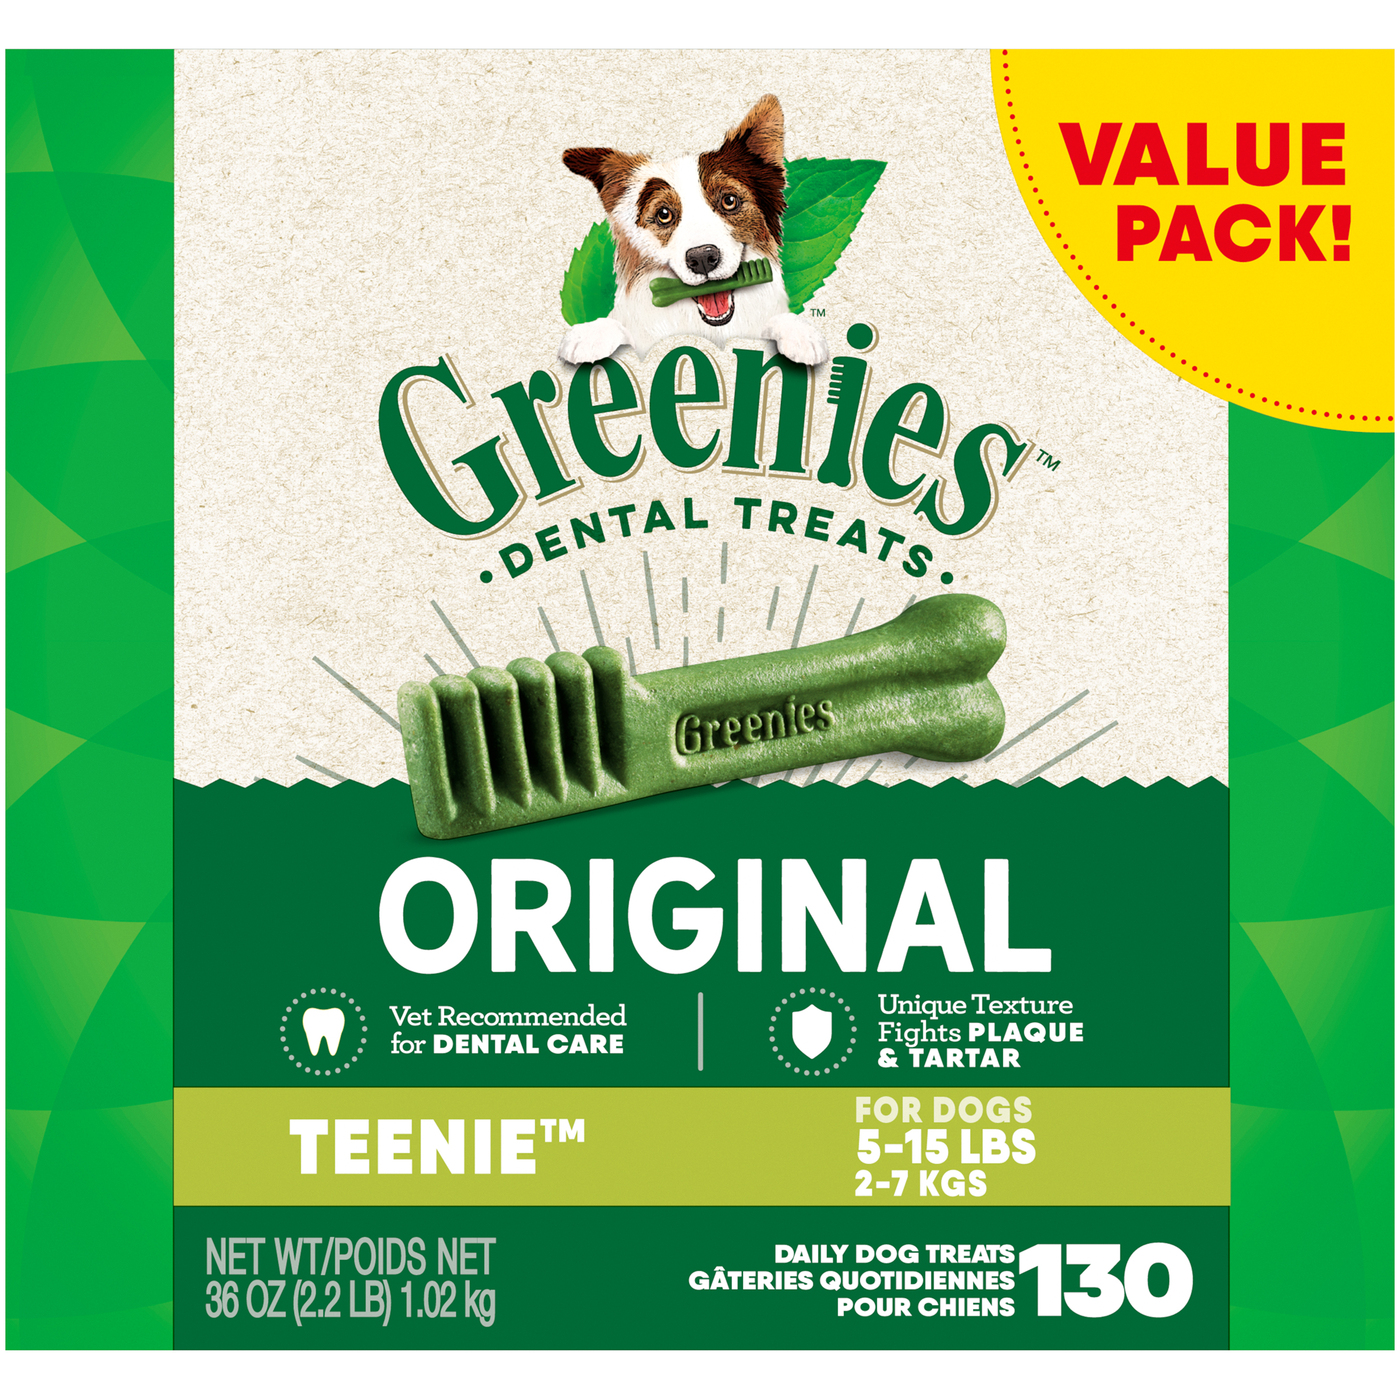 Greenies Original Teenie Daily Dental Treats for Dogs 130 ct Box